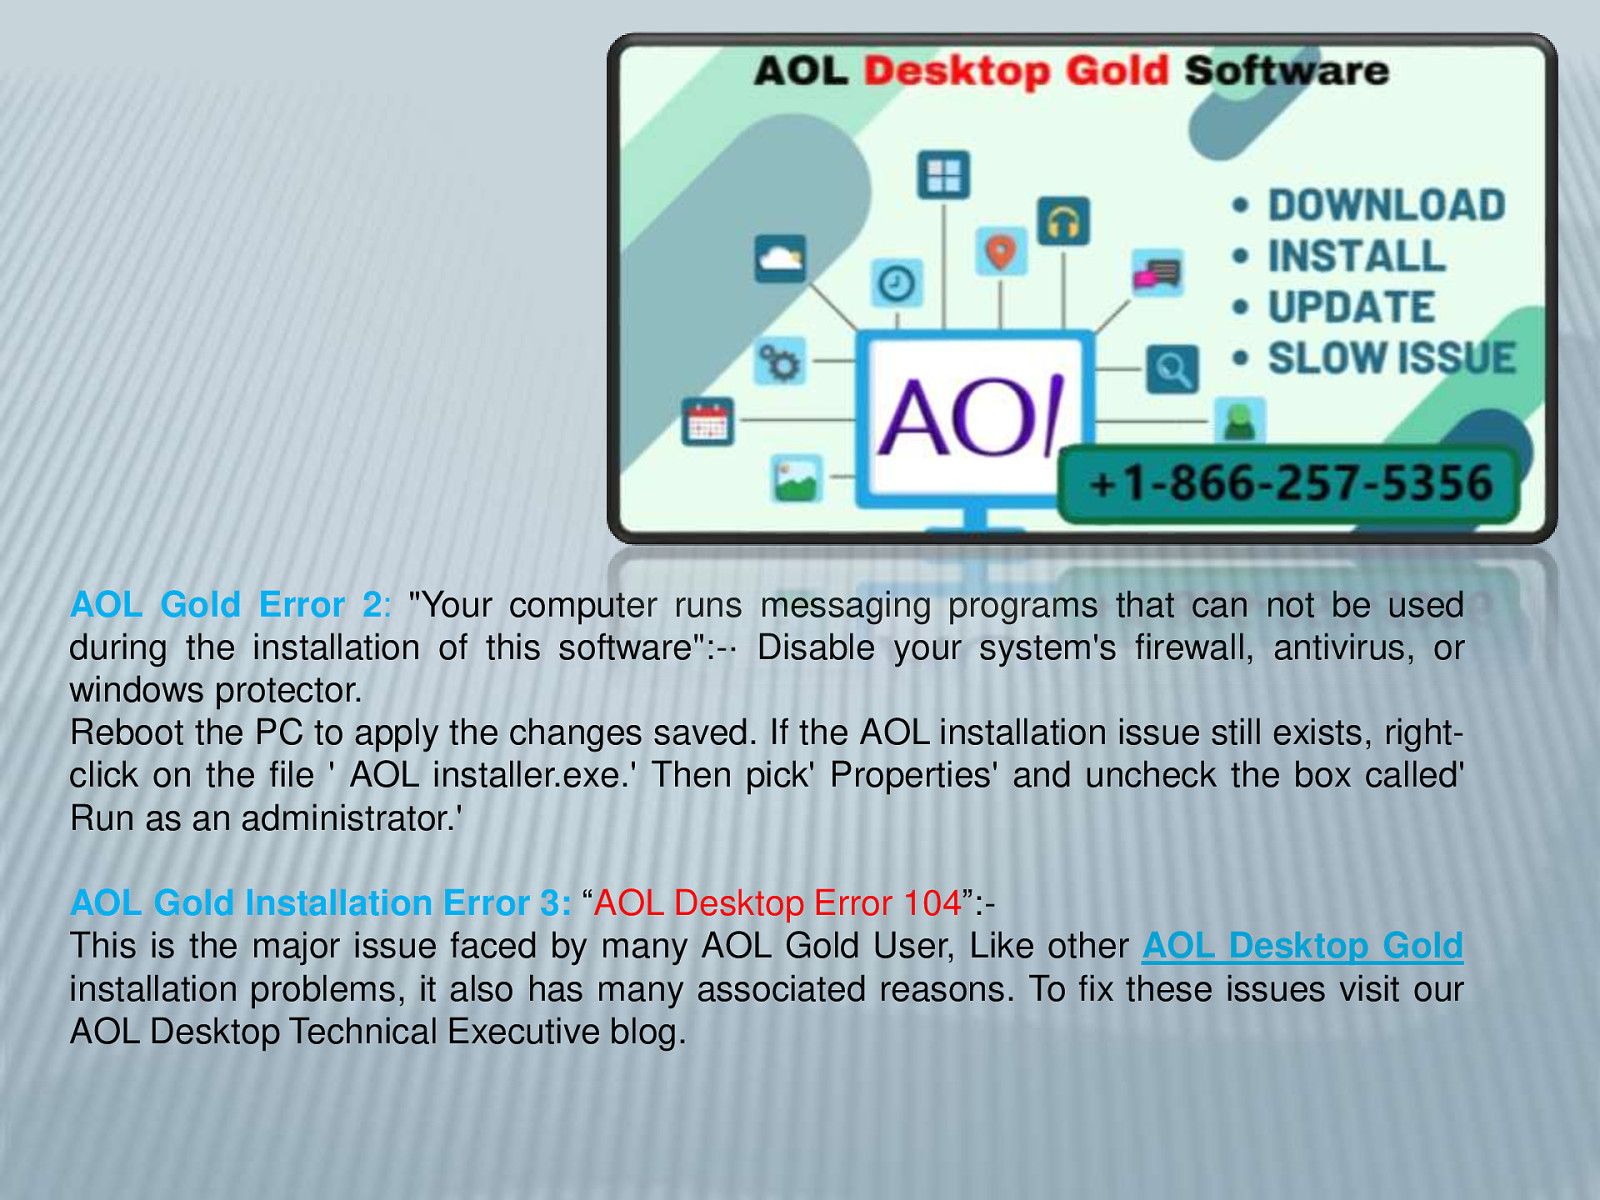 Fix Install Aol Desktop Gold 1 866 257 5356 Complete Guide